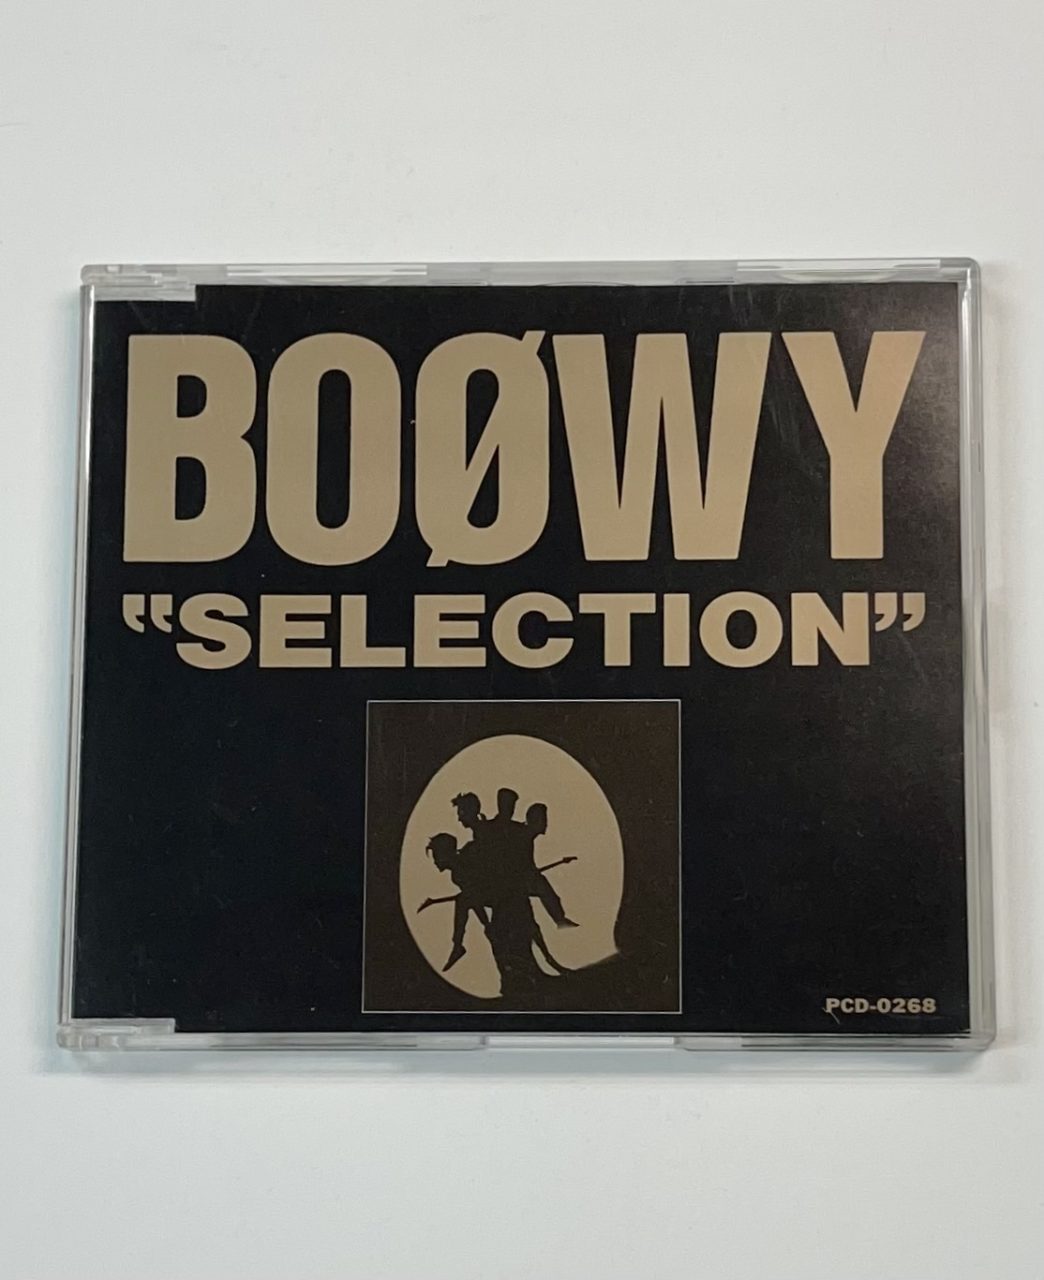 BOOWY 非売品プロモーション販促CD